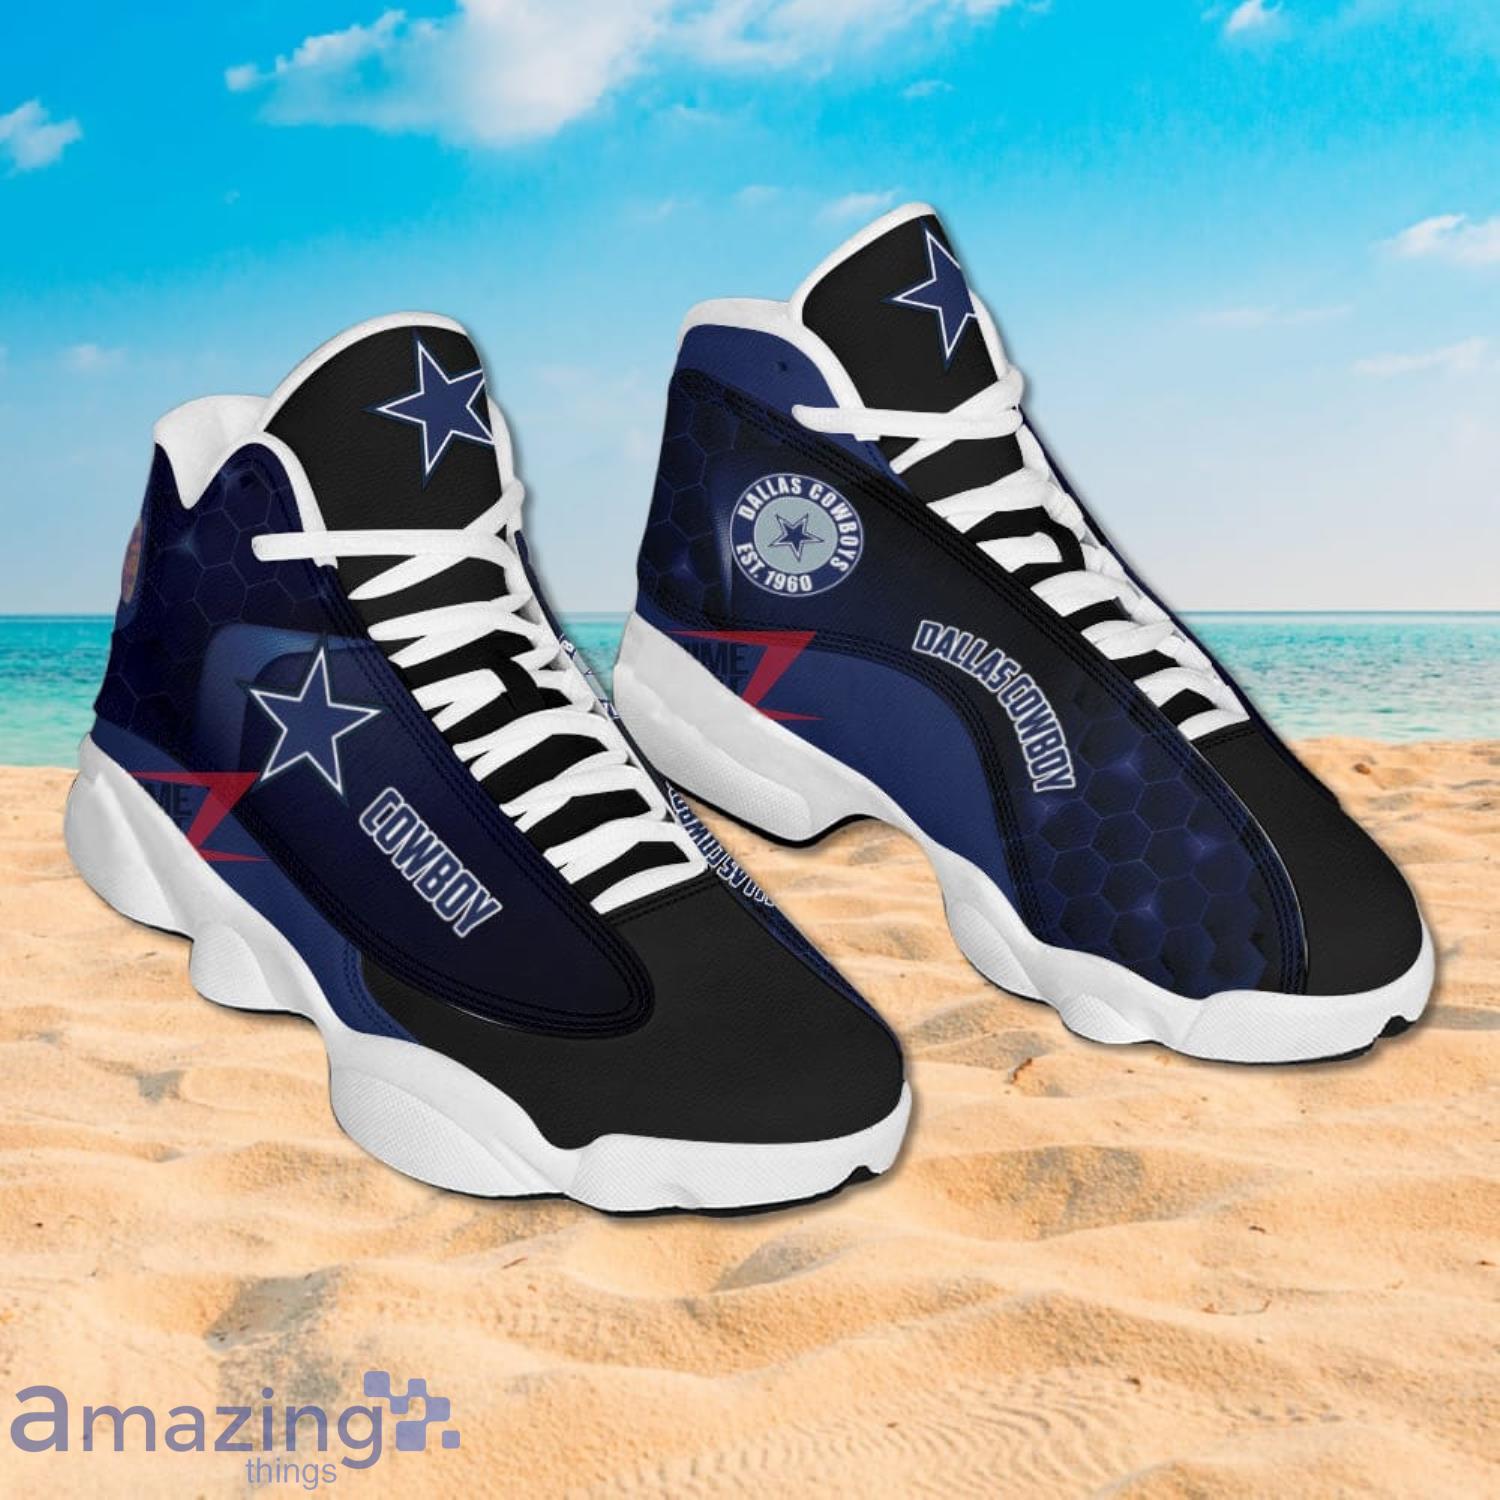 Dallas Cowboys Air Jordan 13 Shoes, Cowboys Limited Custom Shoes